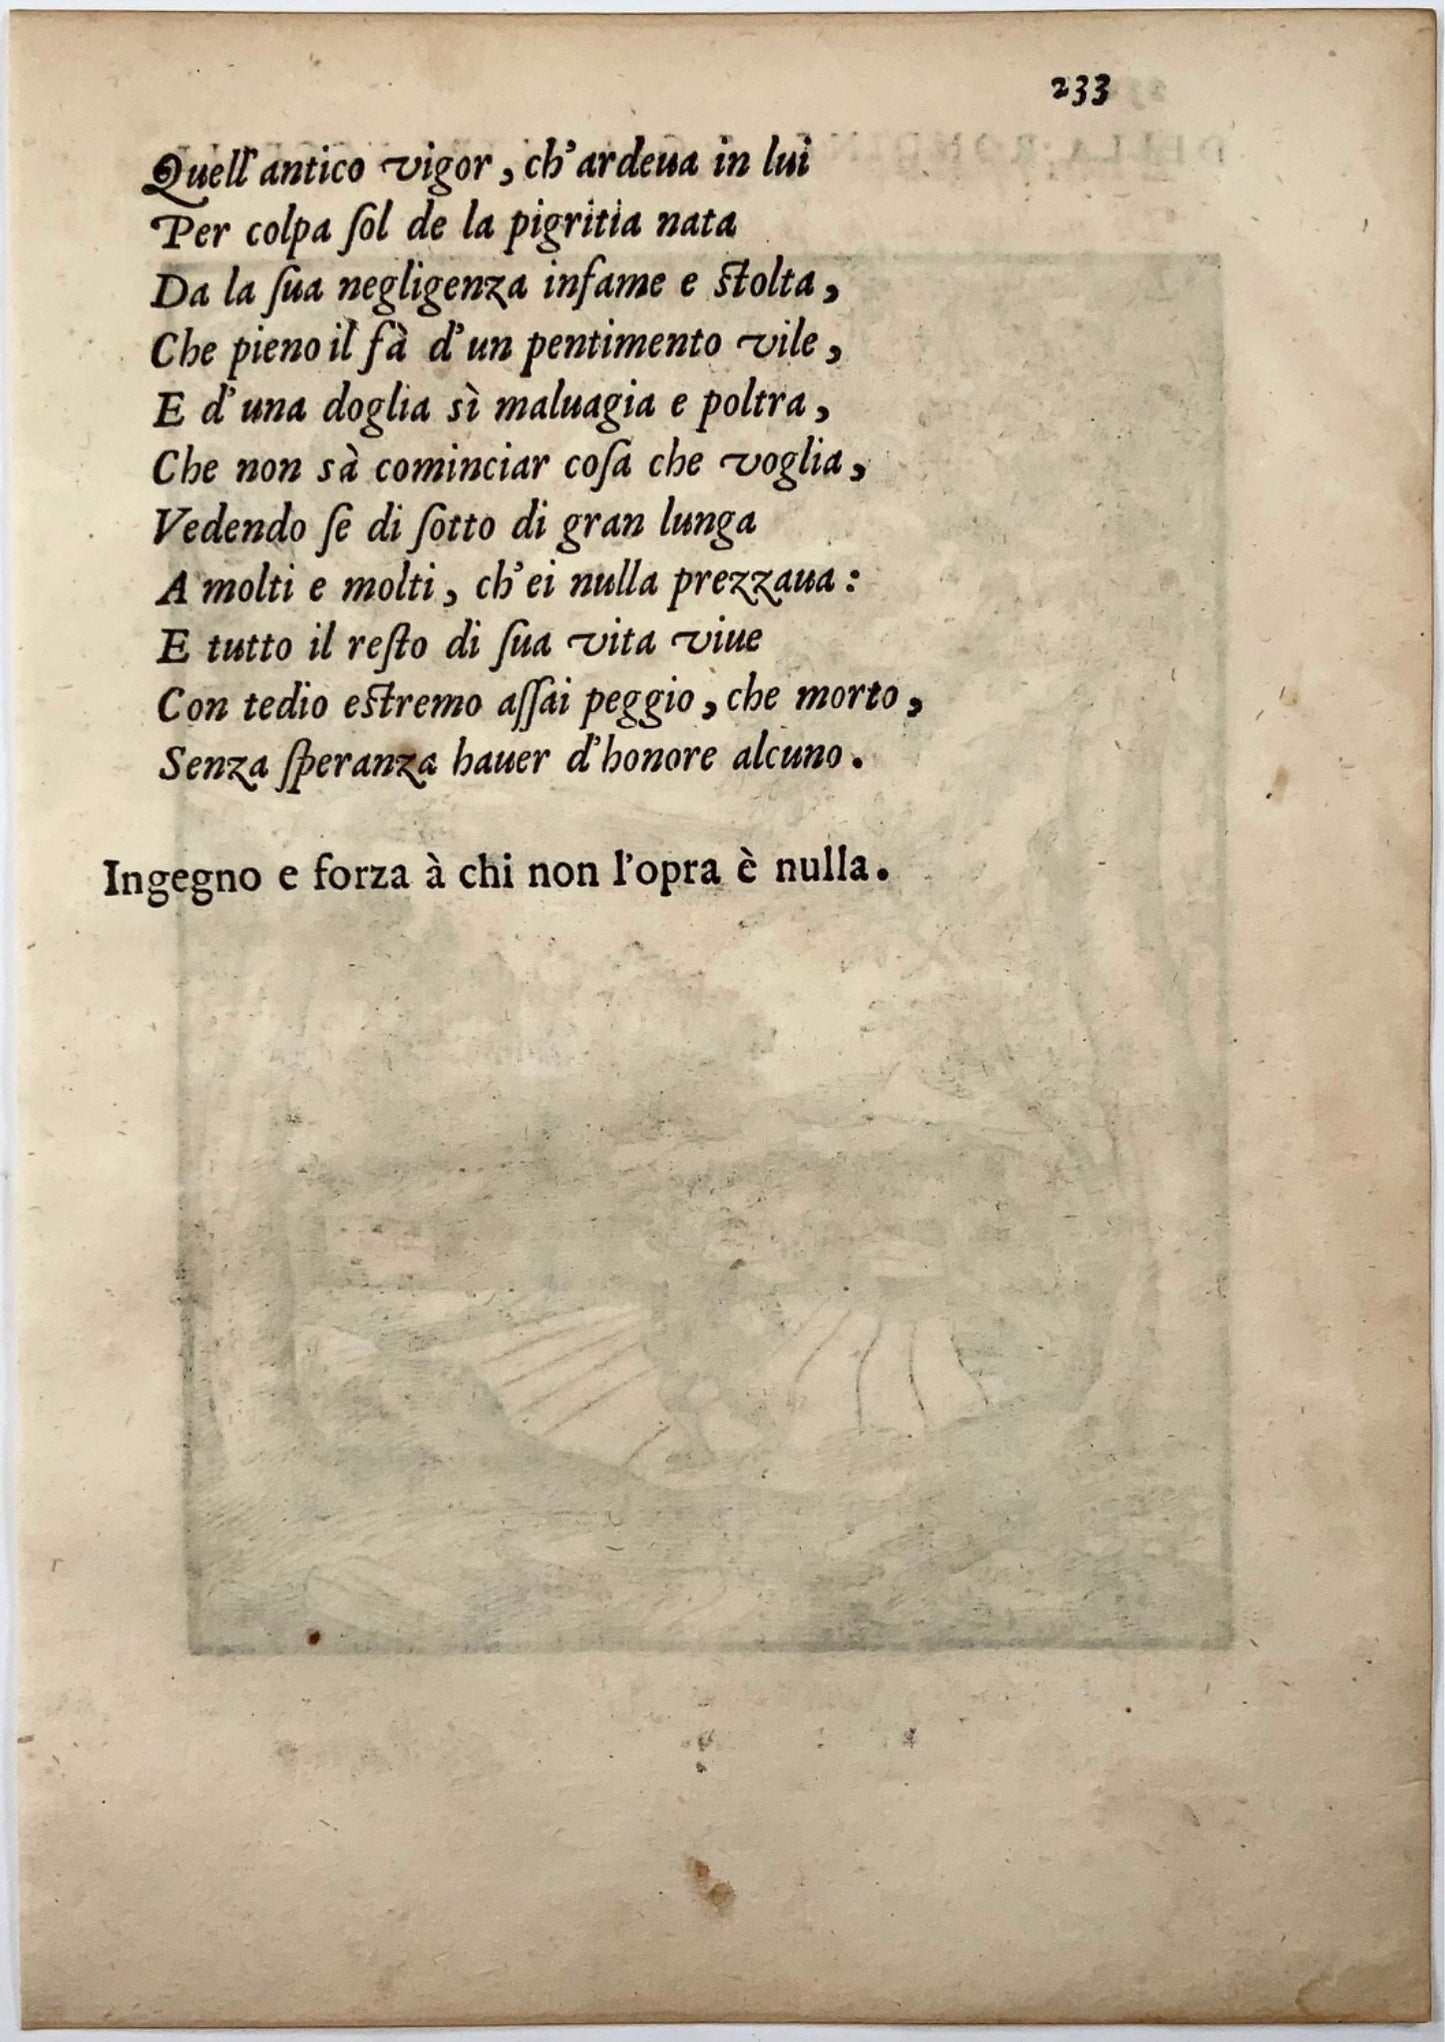 1570 Verdizzotti (b 1525), woodcut, Swallow & other birds, fable